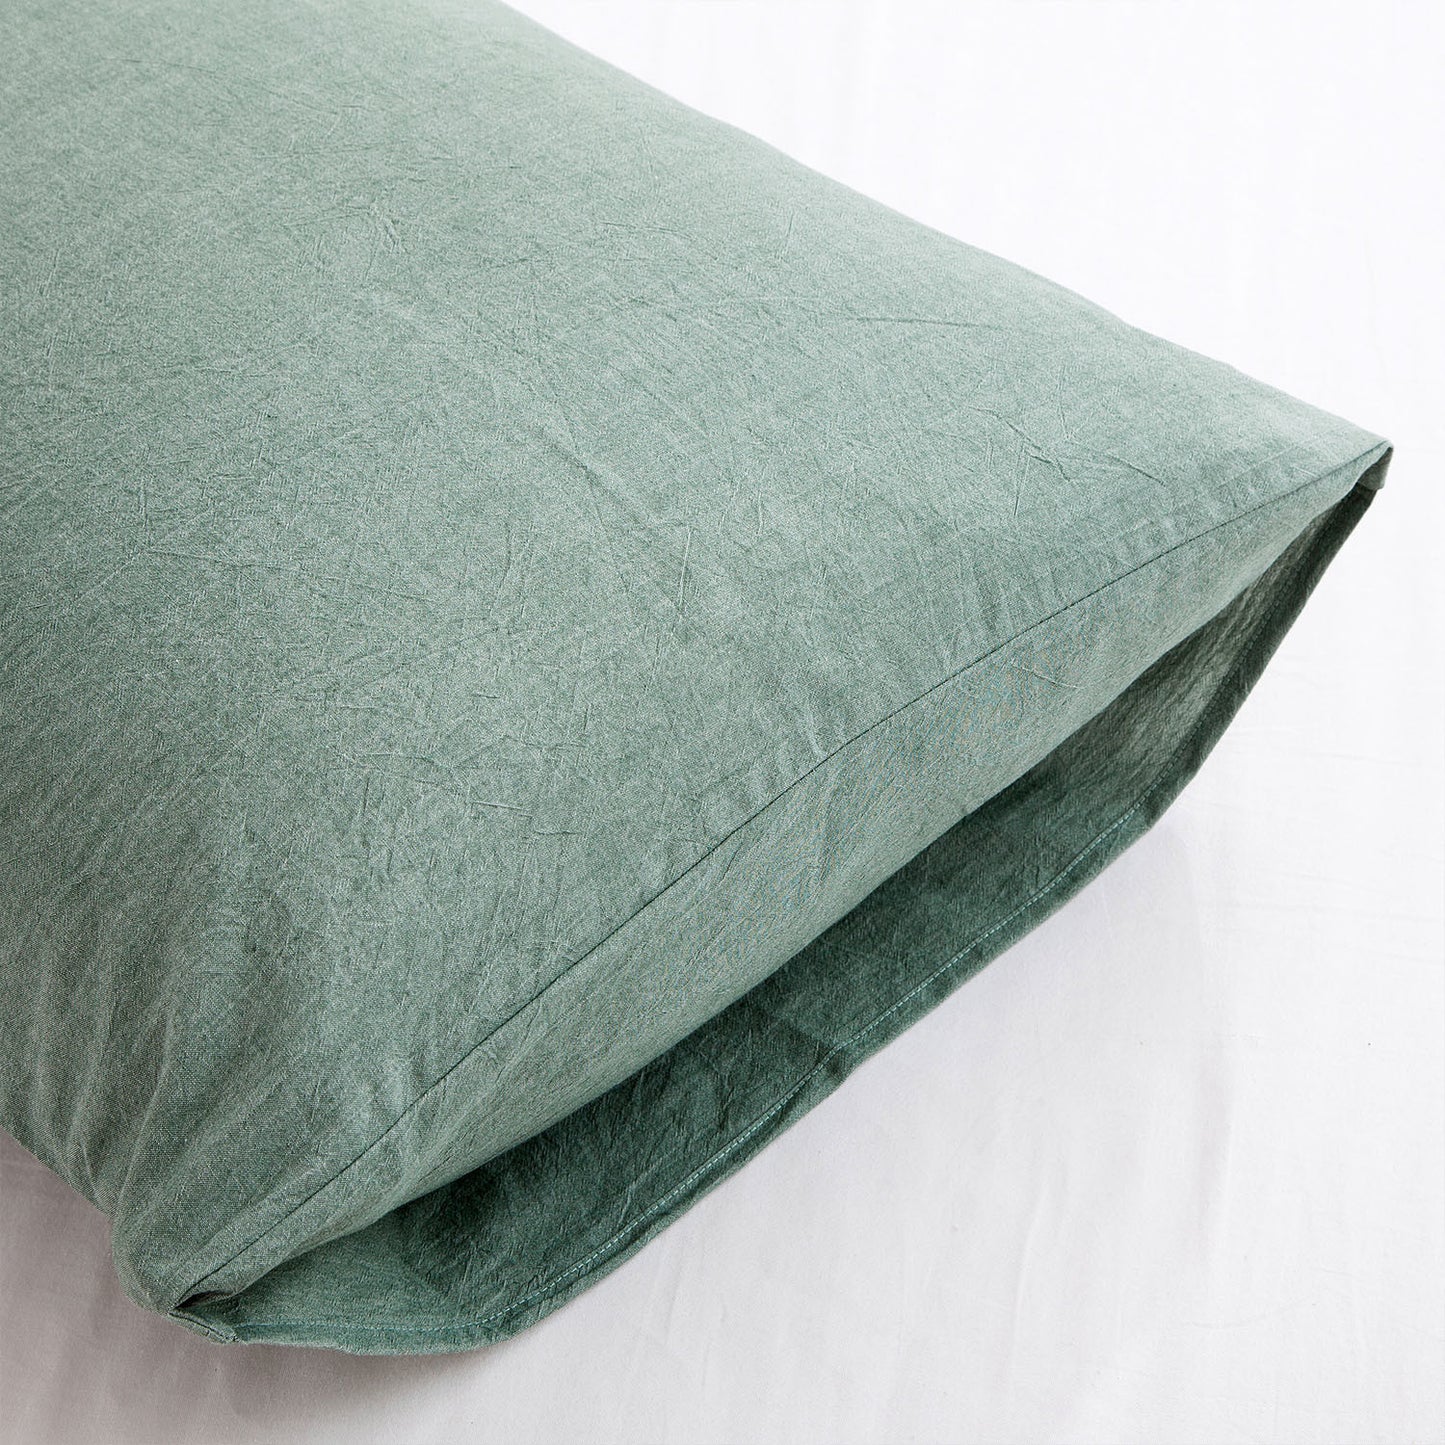 100% Washed Cotton Duvet Cover Set, Durable Fade-Resistant Natural Bedding Set (No Comforter)